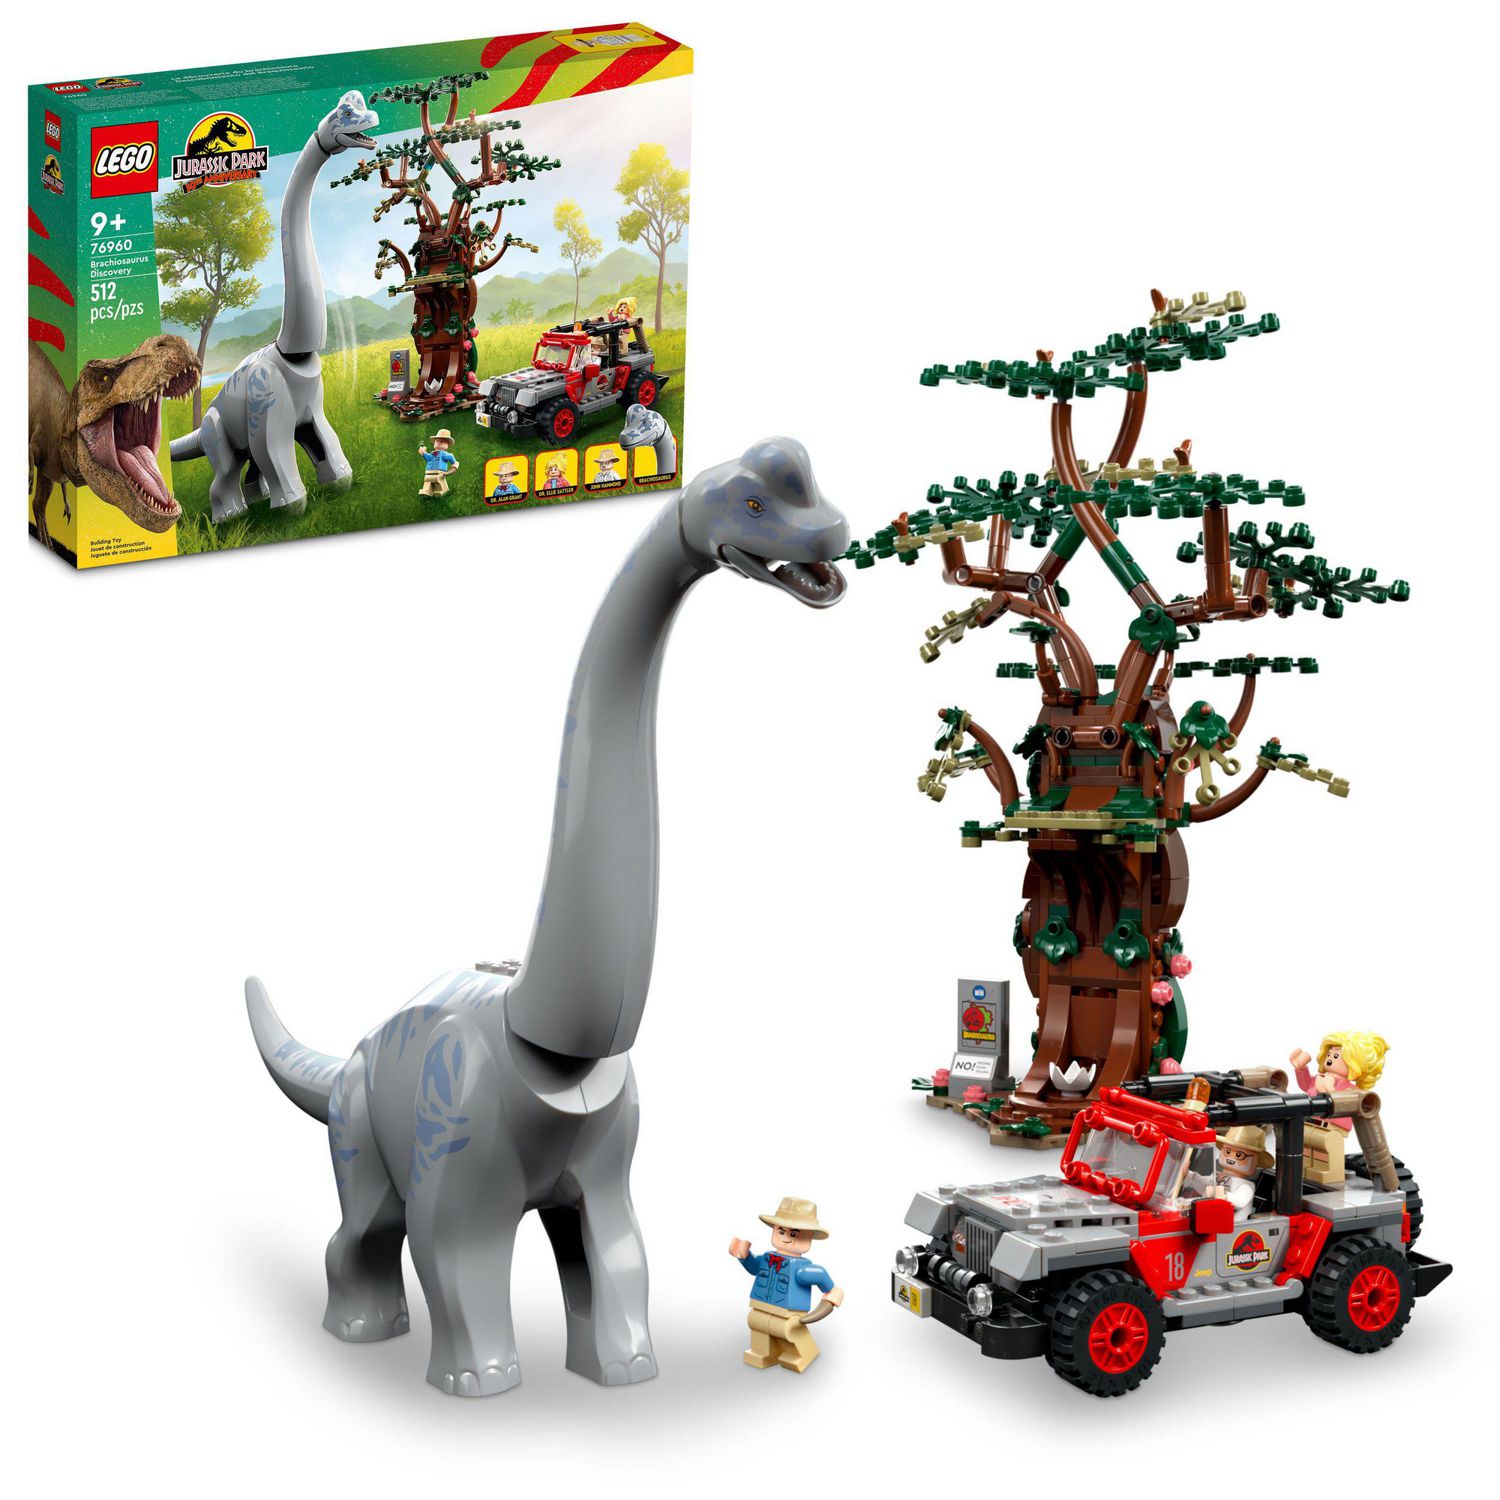 LEGO Jurassic World Steam Key for PC - Buy now